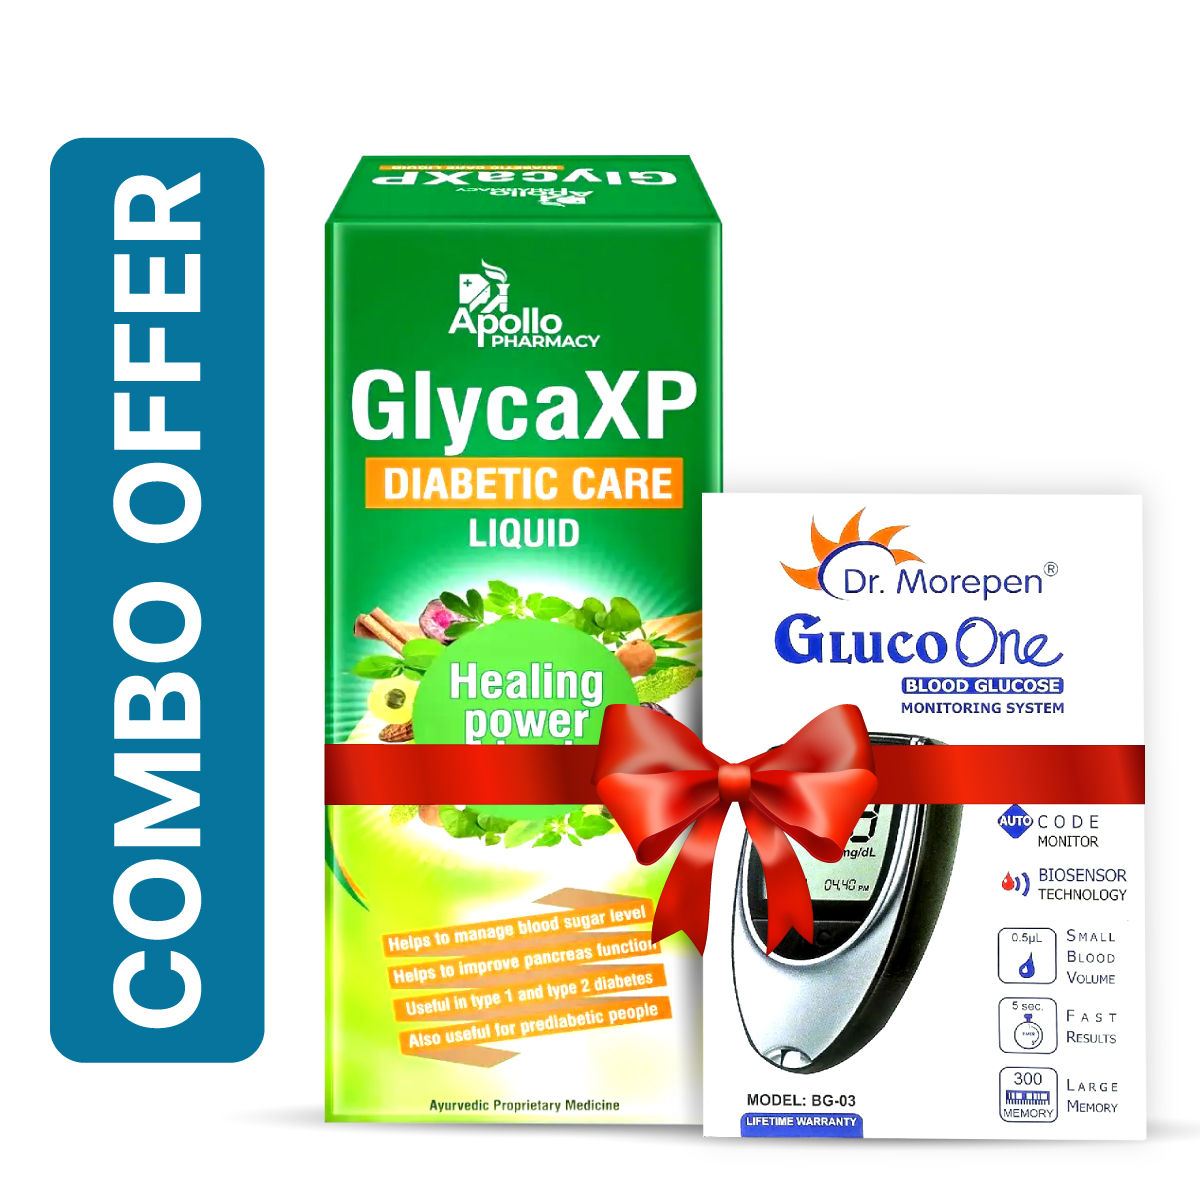 Apollo Pharmacy GlycaXP + Dr. Morepen Glucometer Combo Pack, 1 Kit, Pack of 1 